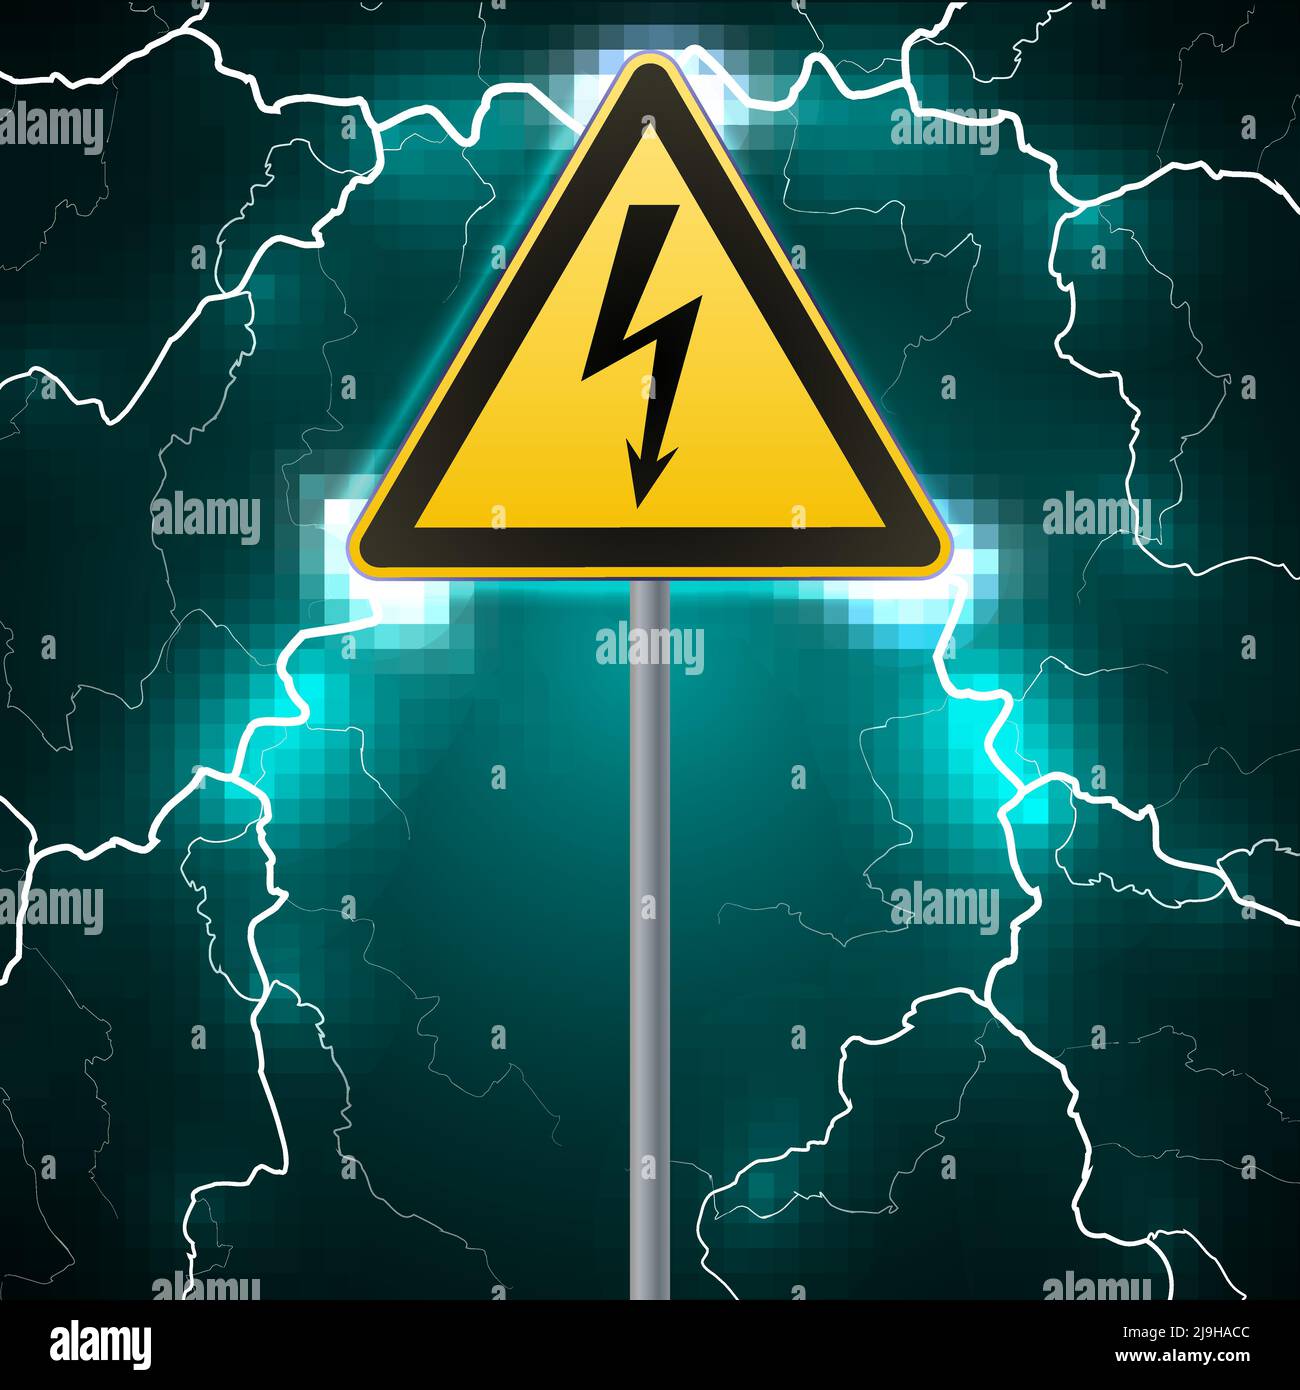 Электрический ток опасен для жизни. Знак электричества. Знак молния. Молния в треугольнике. Электричество опасно.